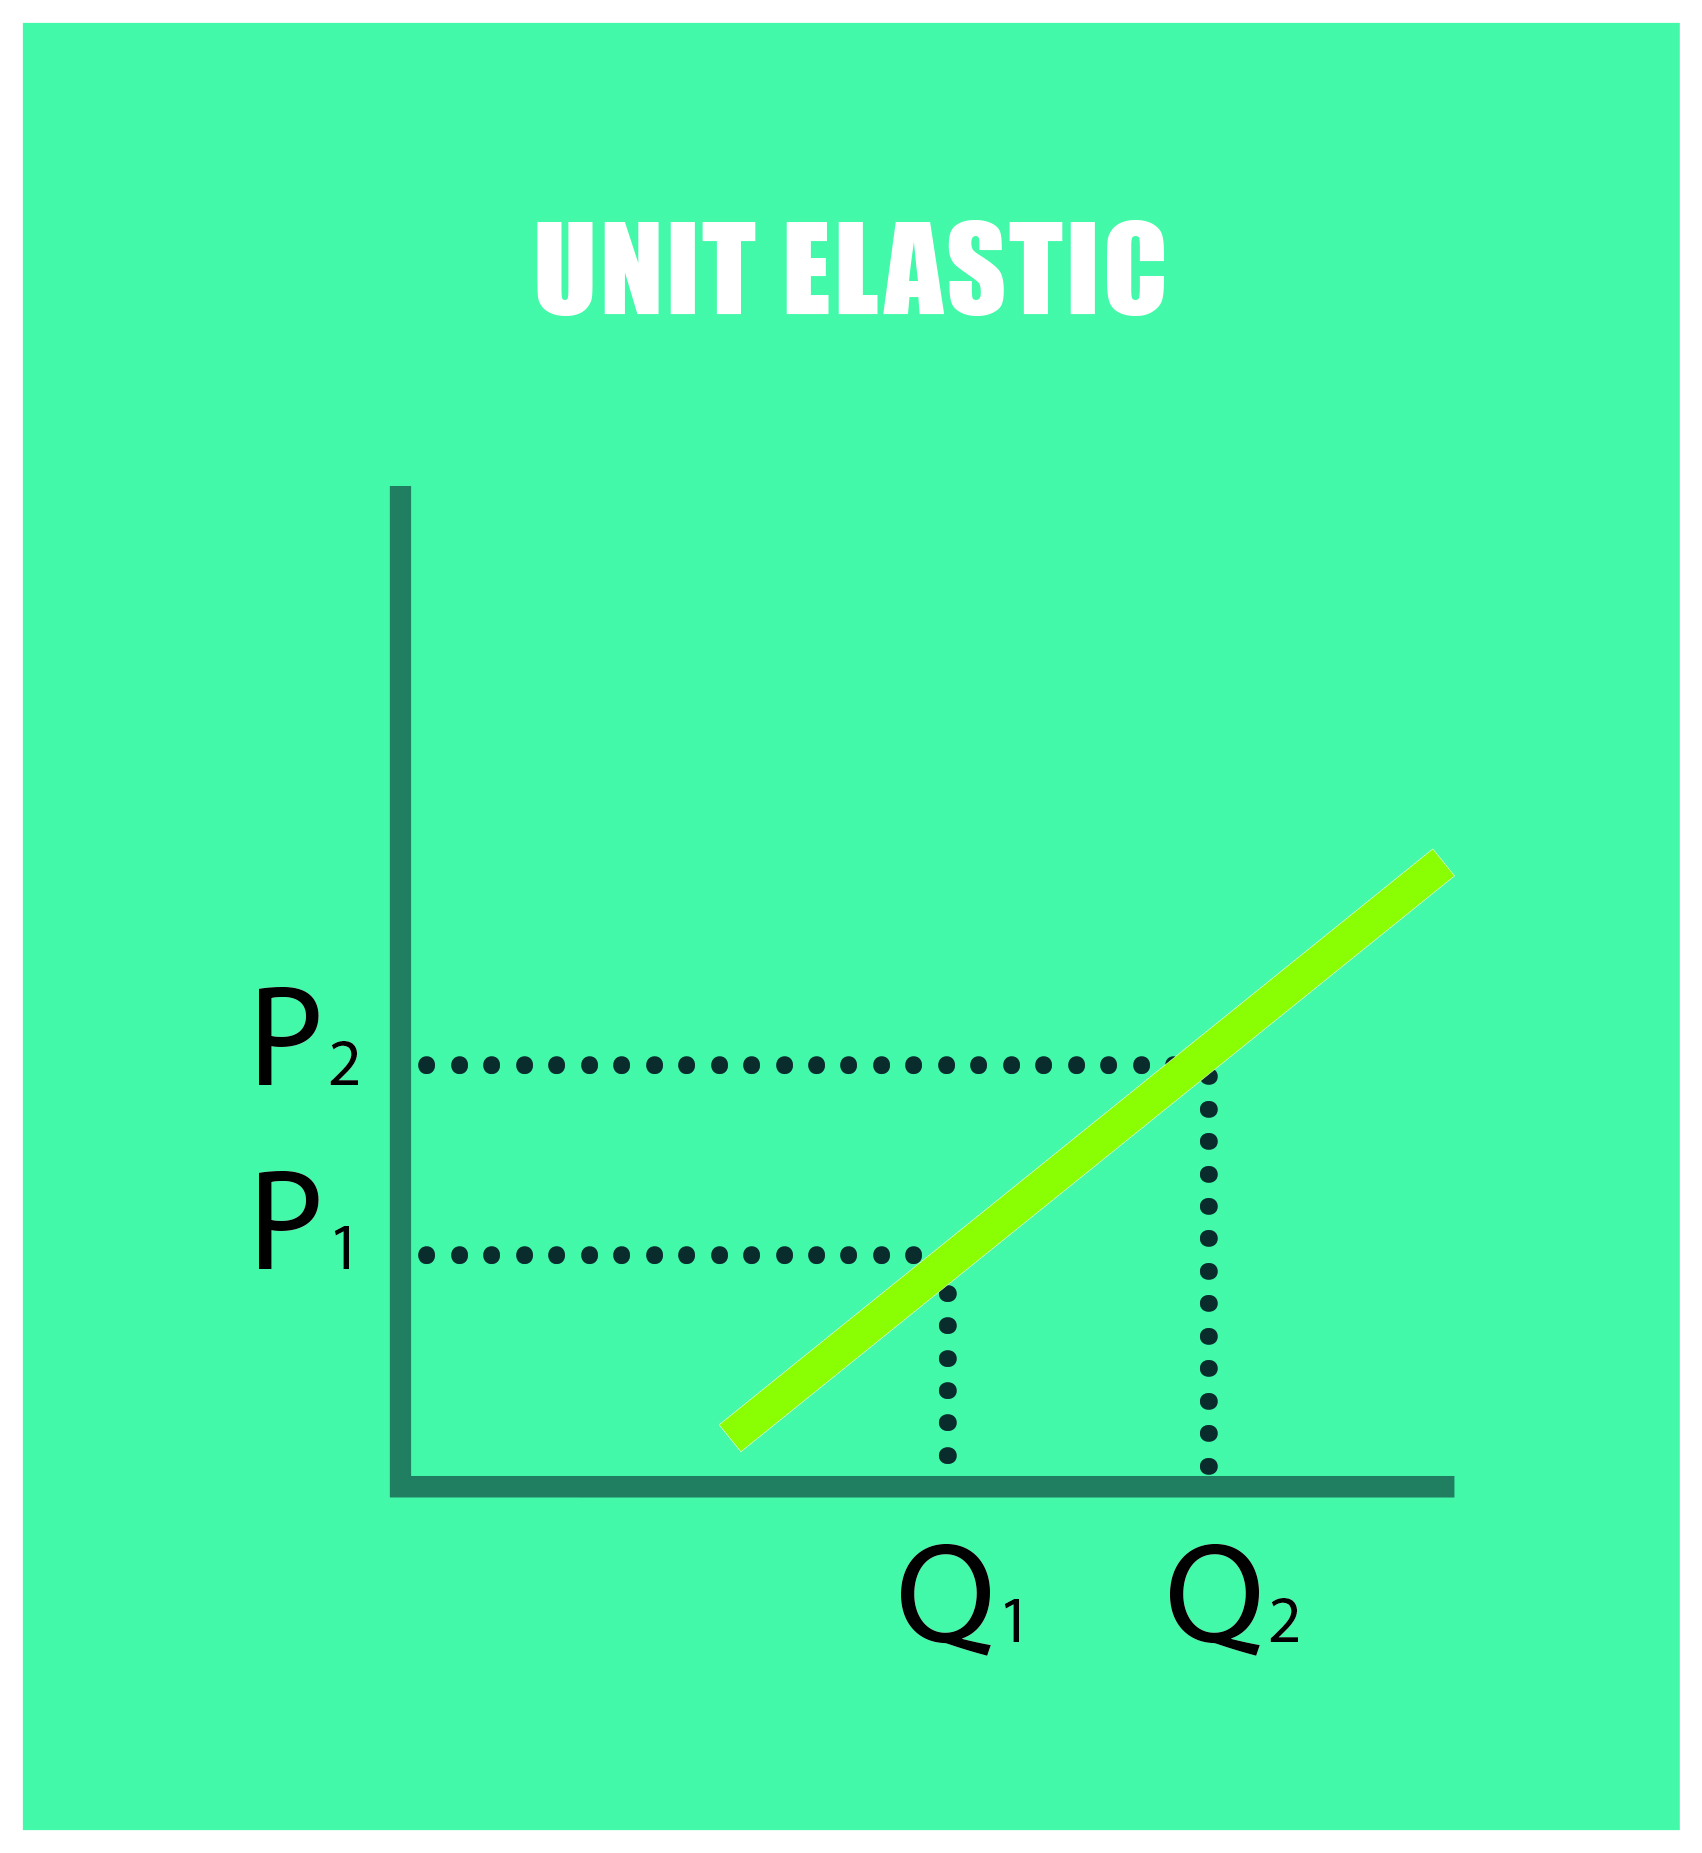 Unit elastic